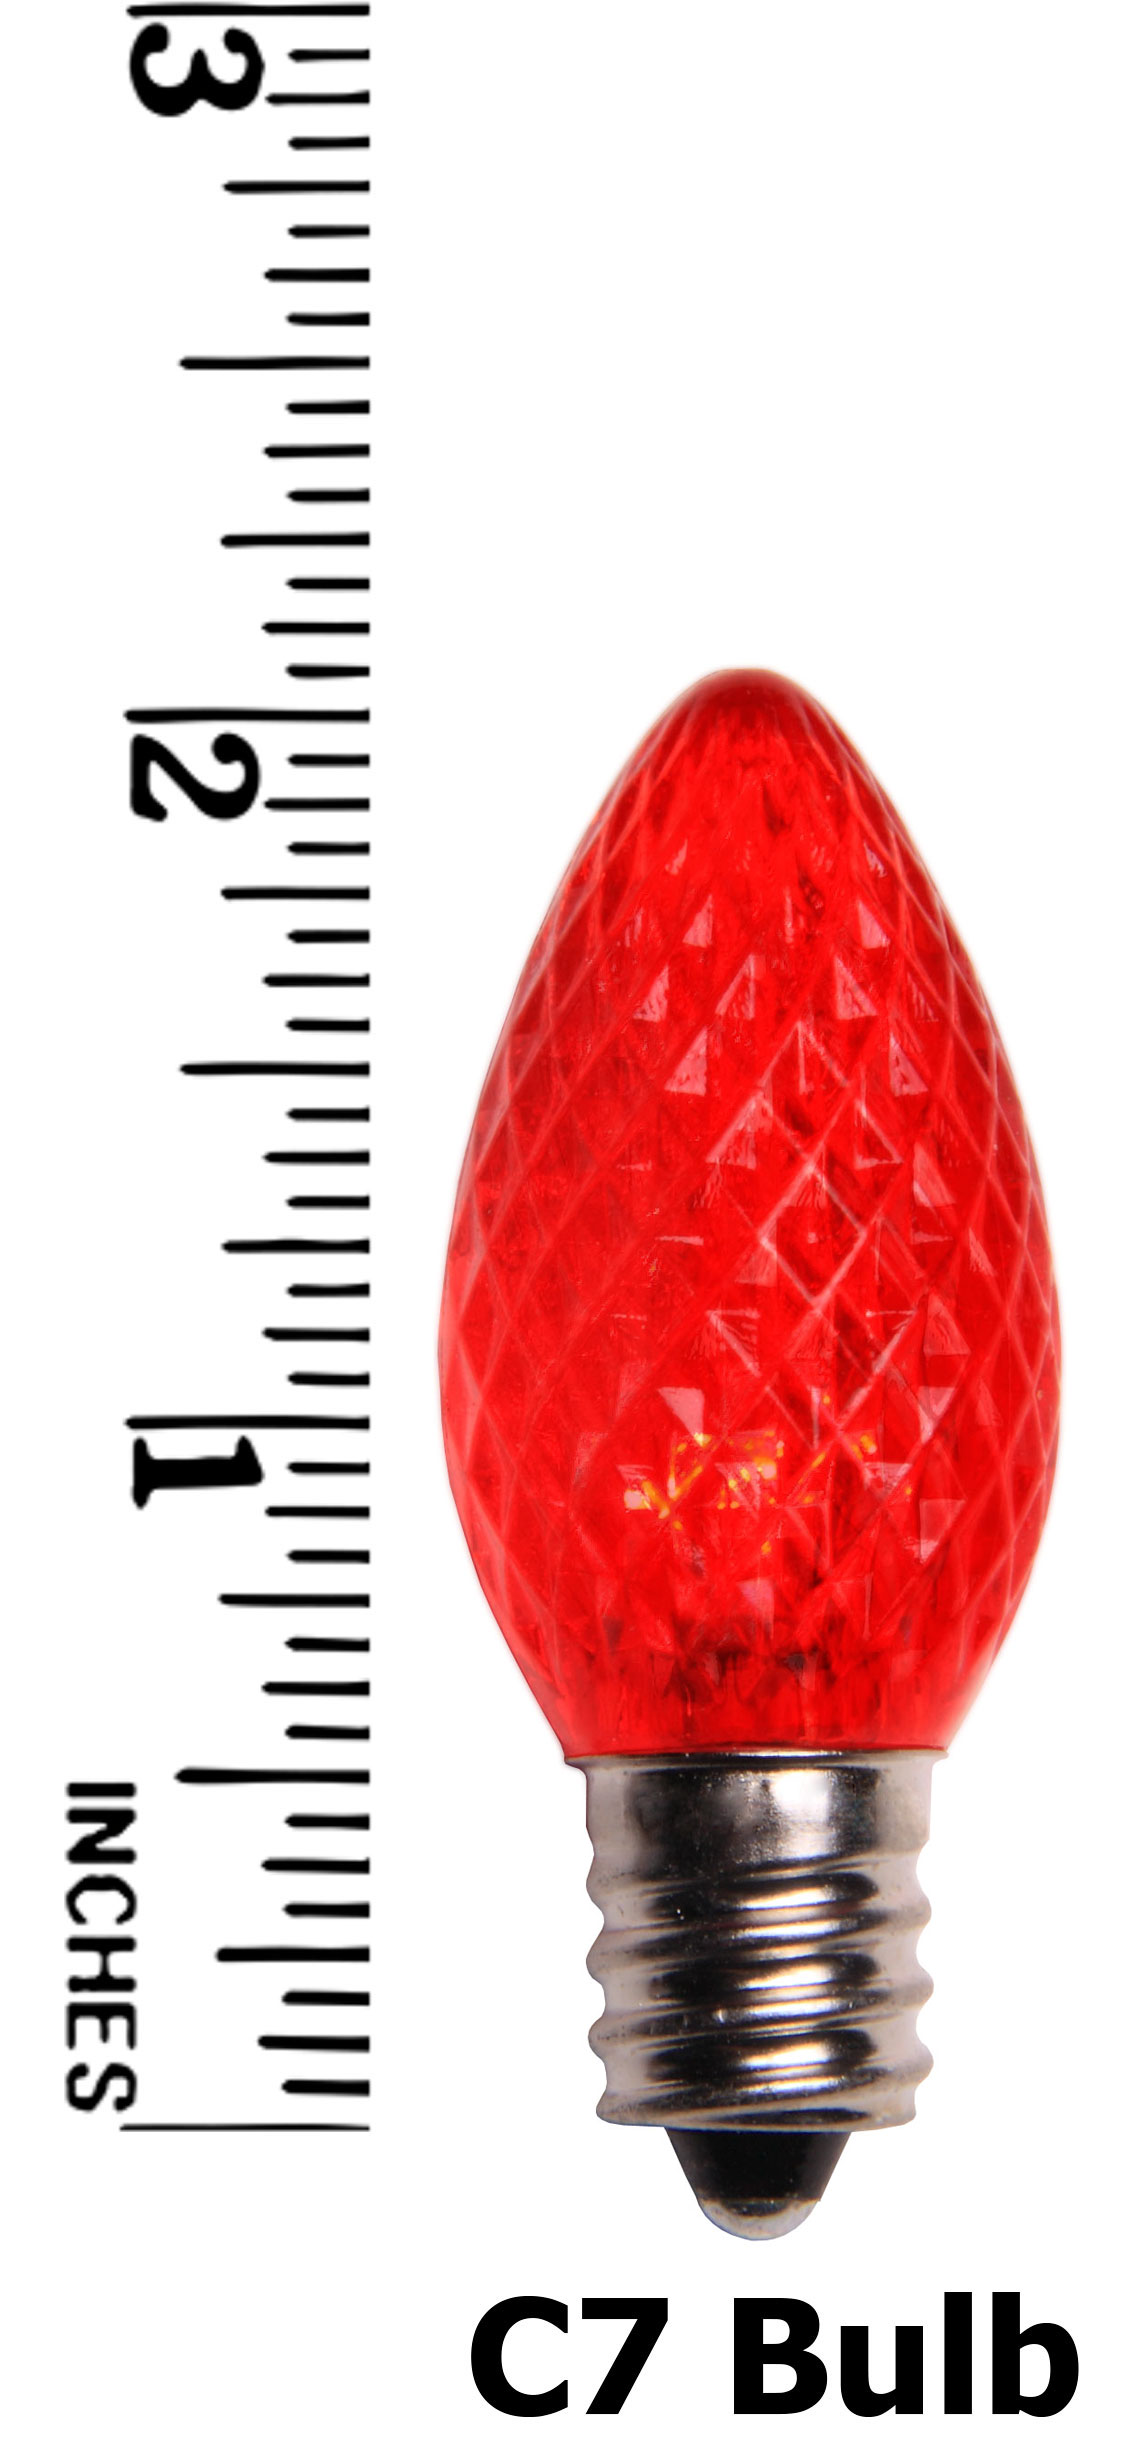 Led Christmas Light Bulb Size Chart